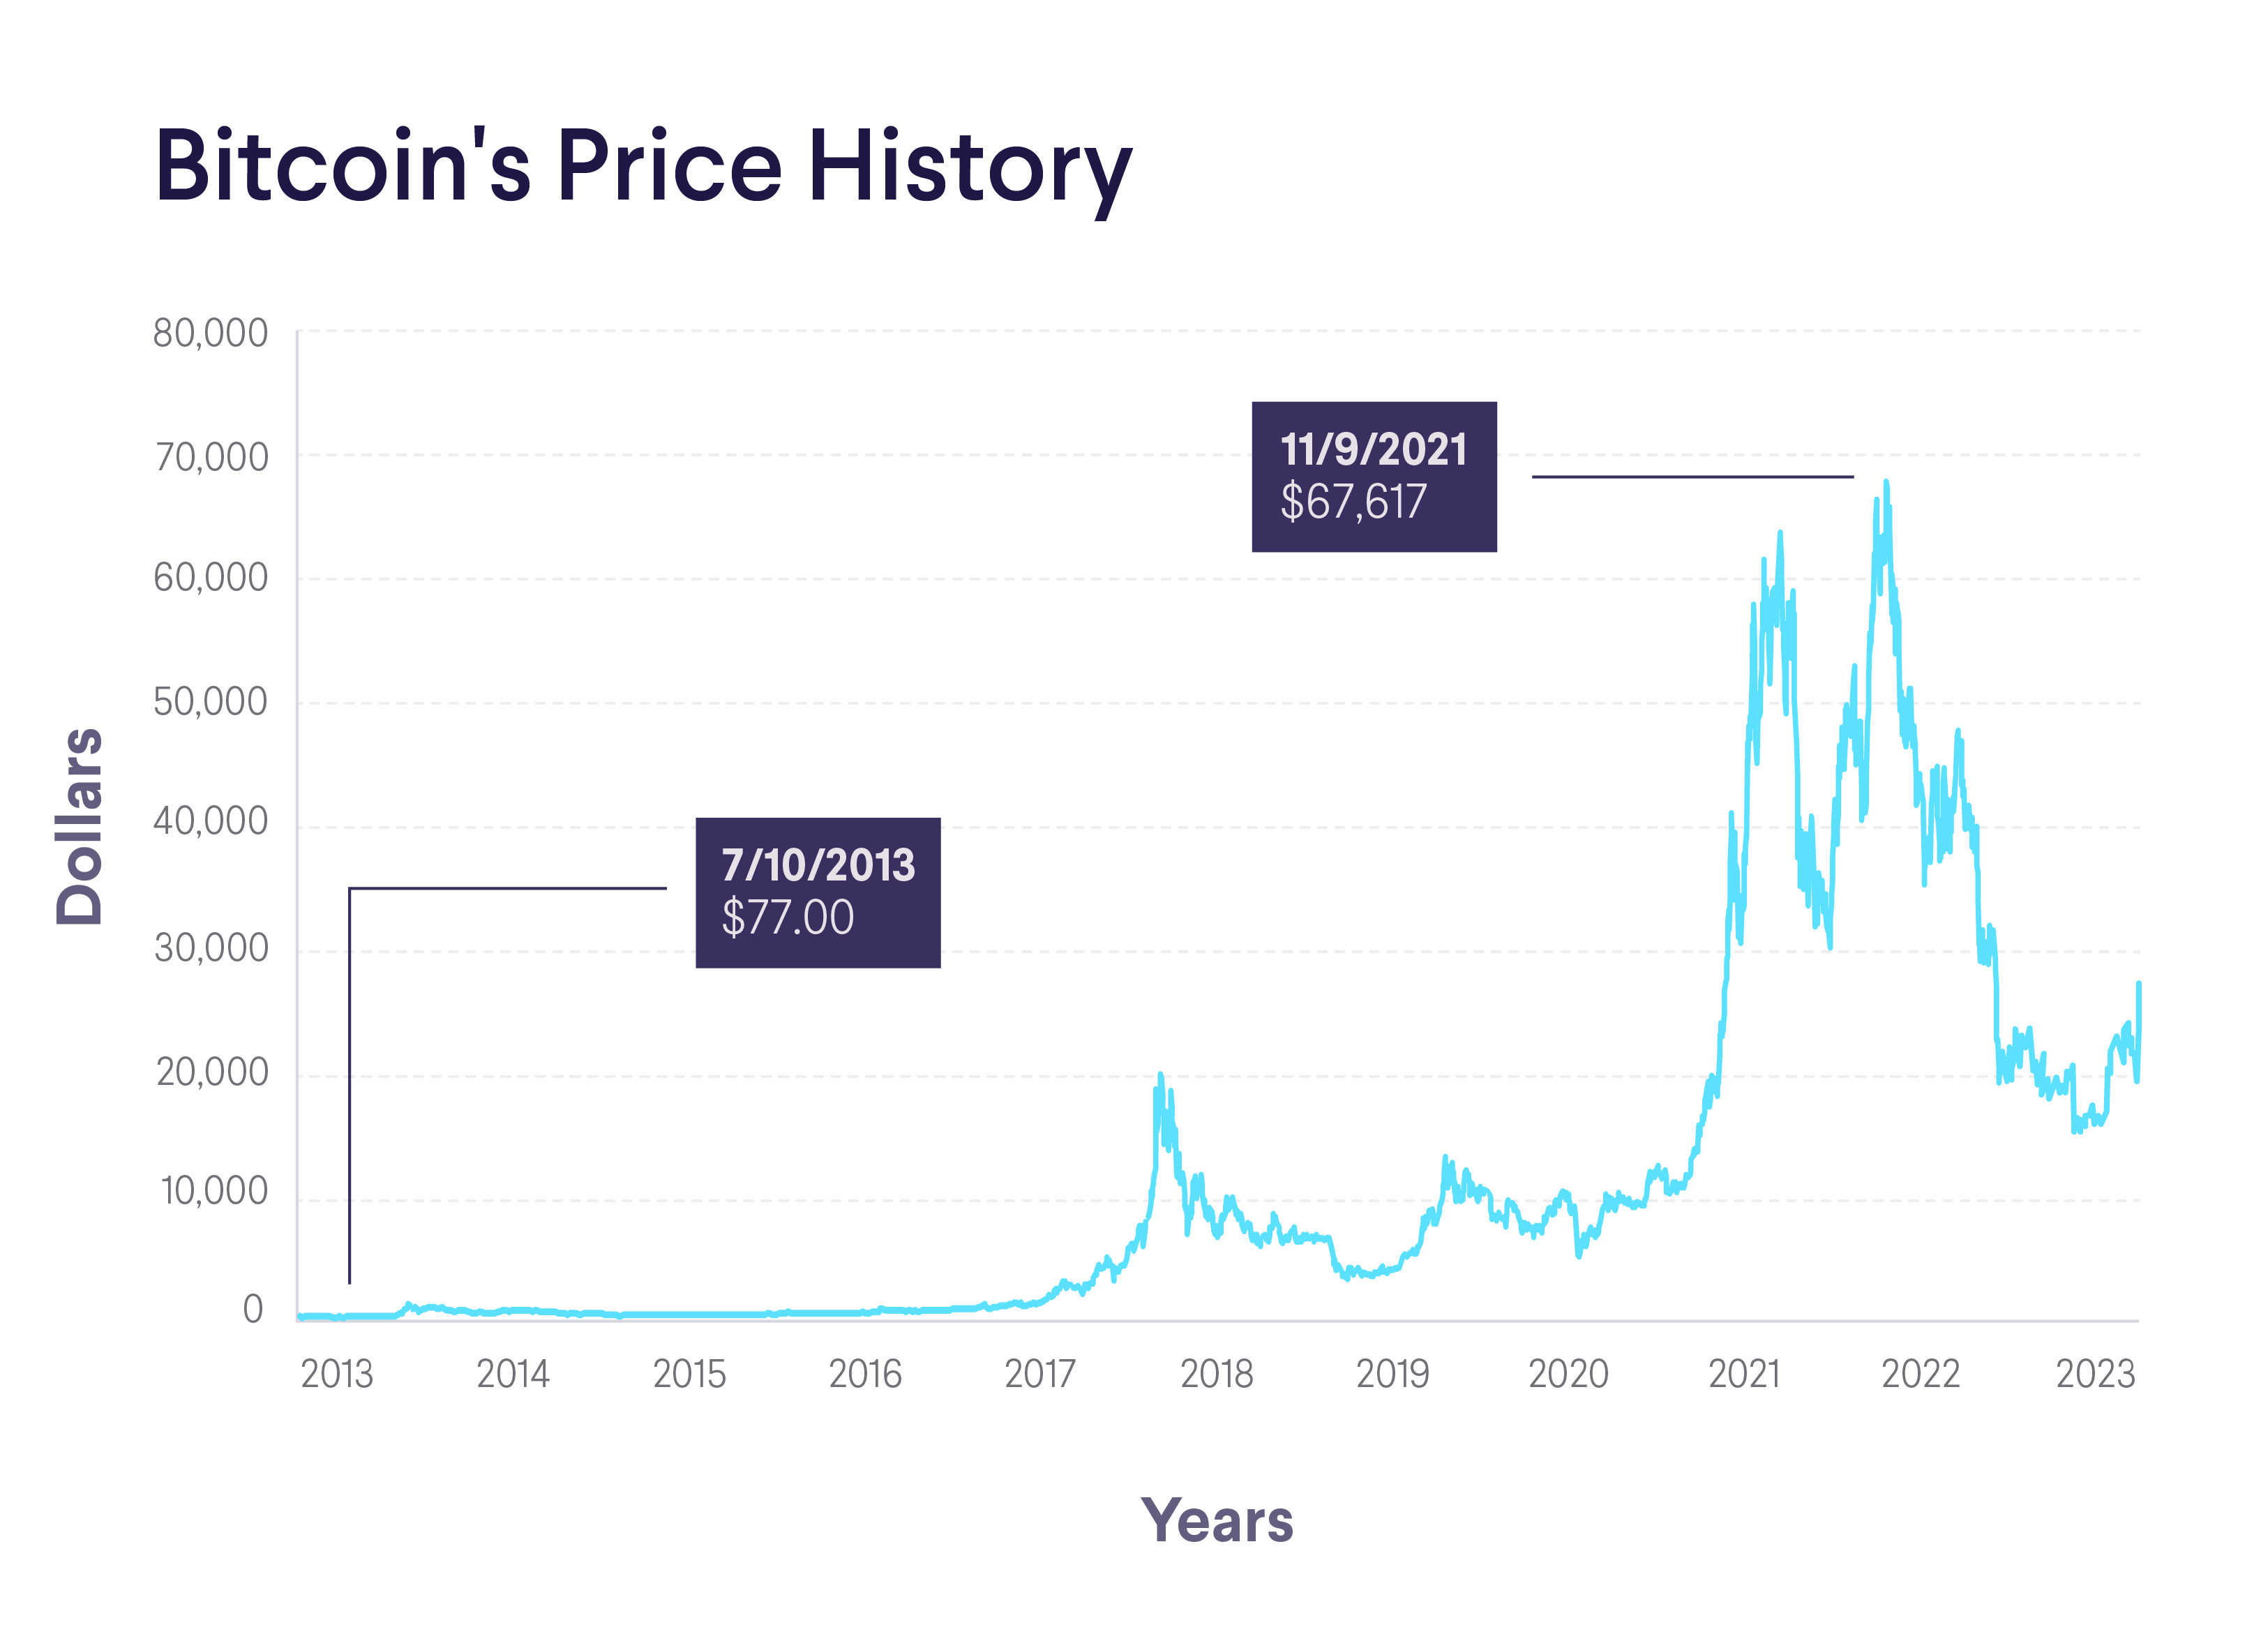 Live Ethereum Price Today [+ Historical ETH Price Data] - bitcoinhelp.fun